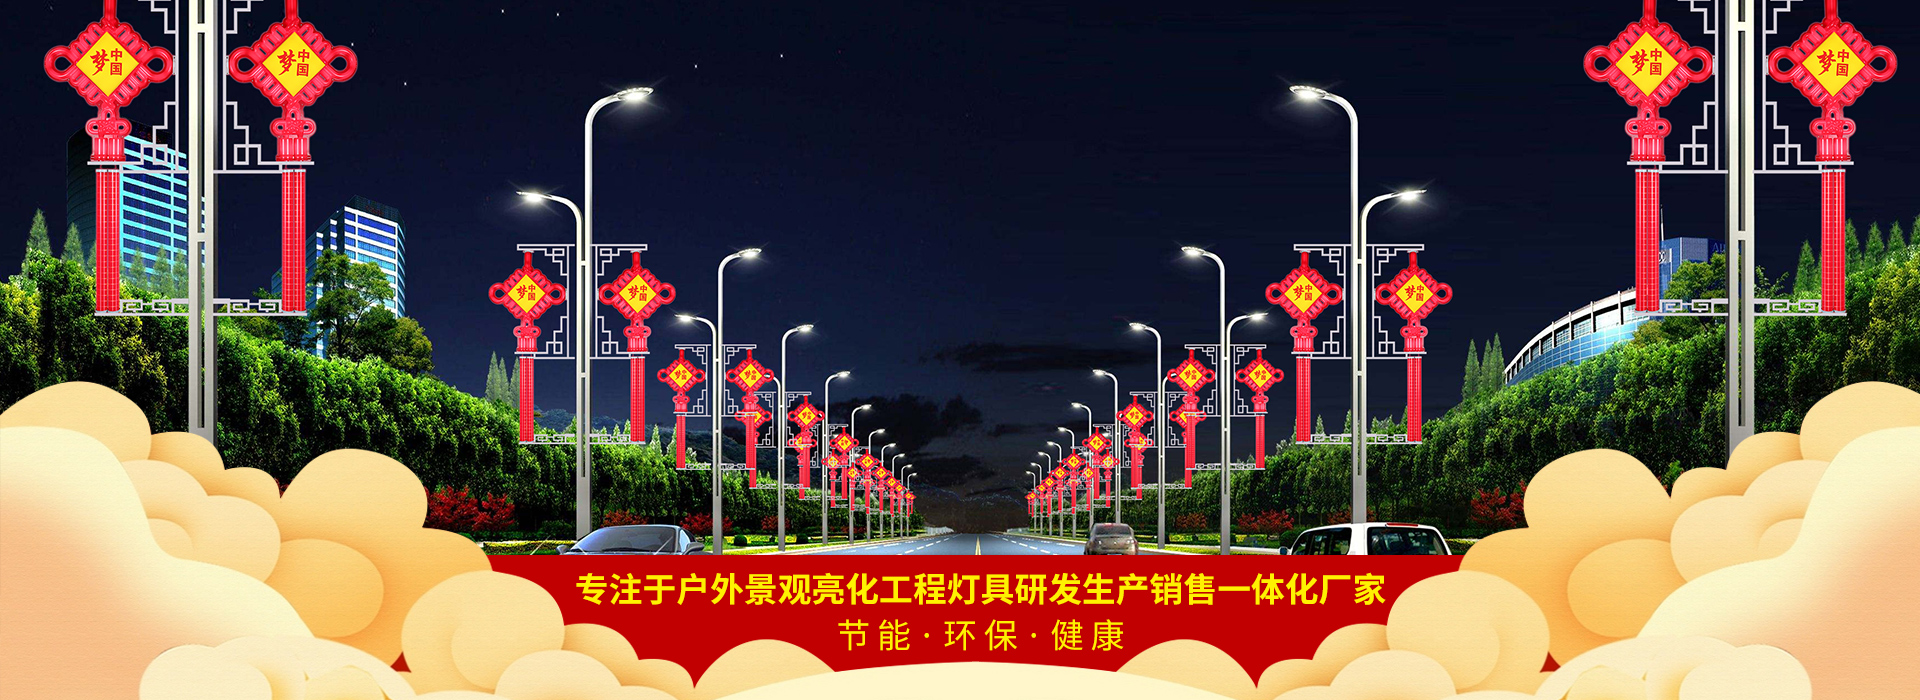 led节日景观灯,led中国结厂家,led灯笼,led广告灯箱